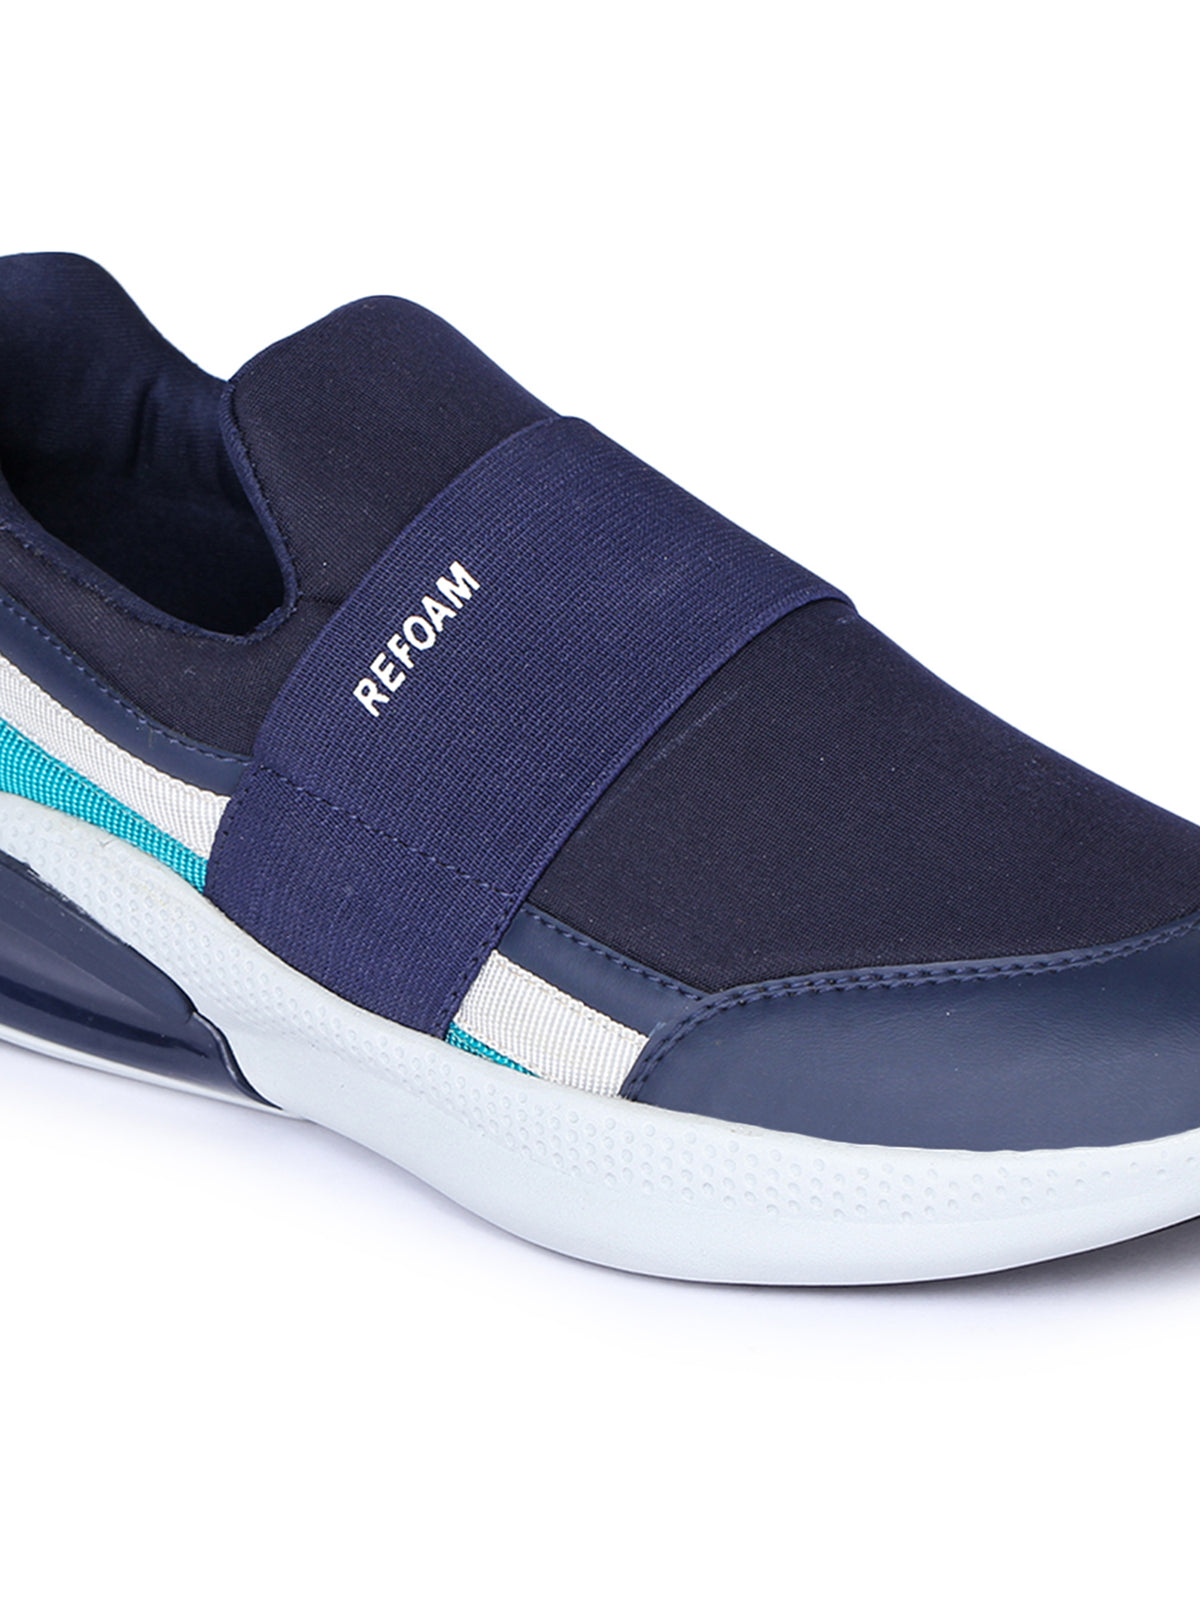 Buy Bugatti Men Solid Blue Sneakers Shoes Online